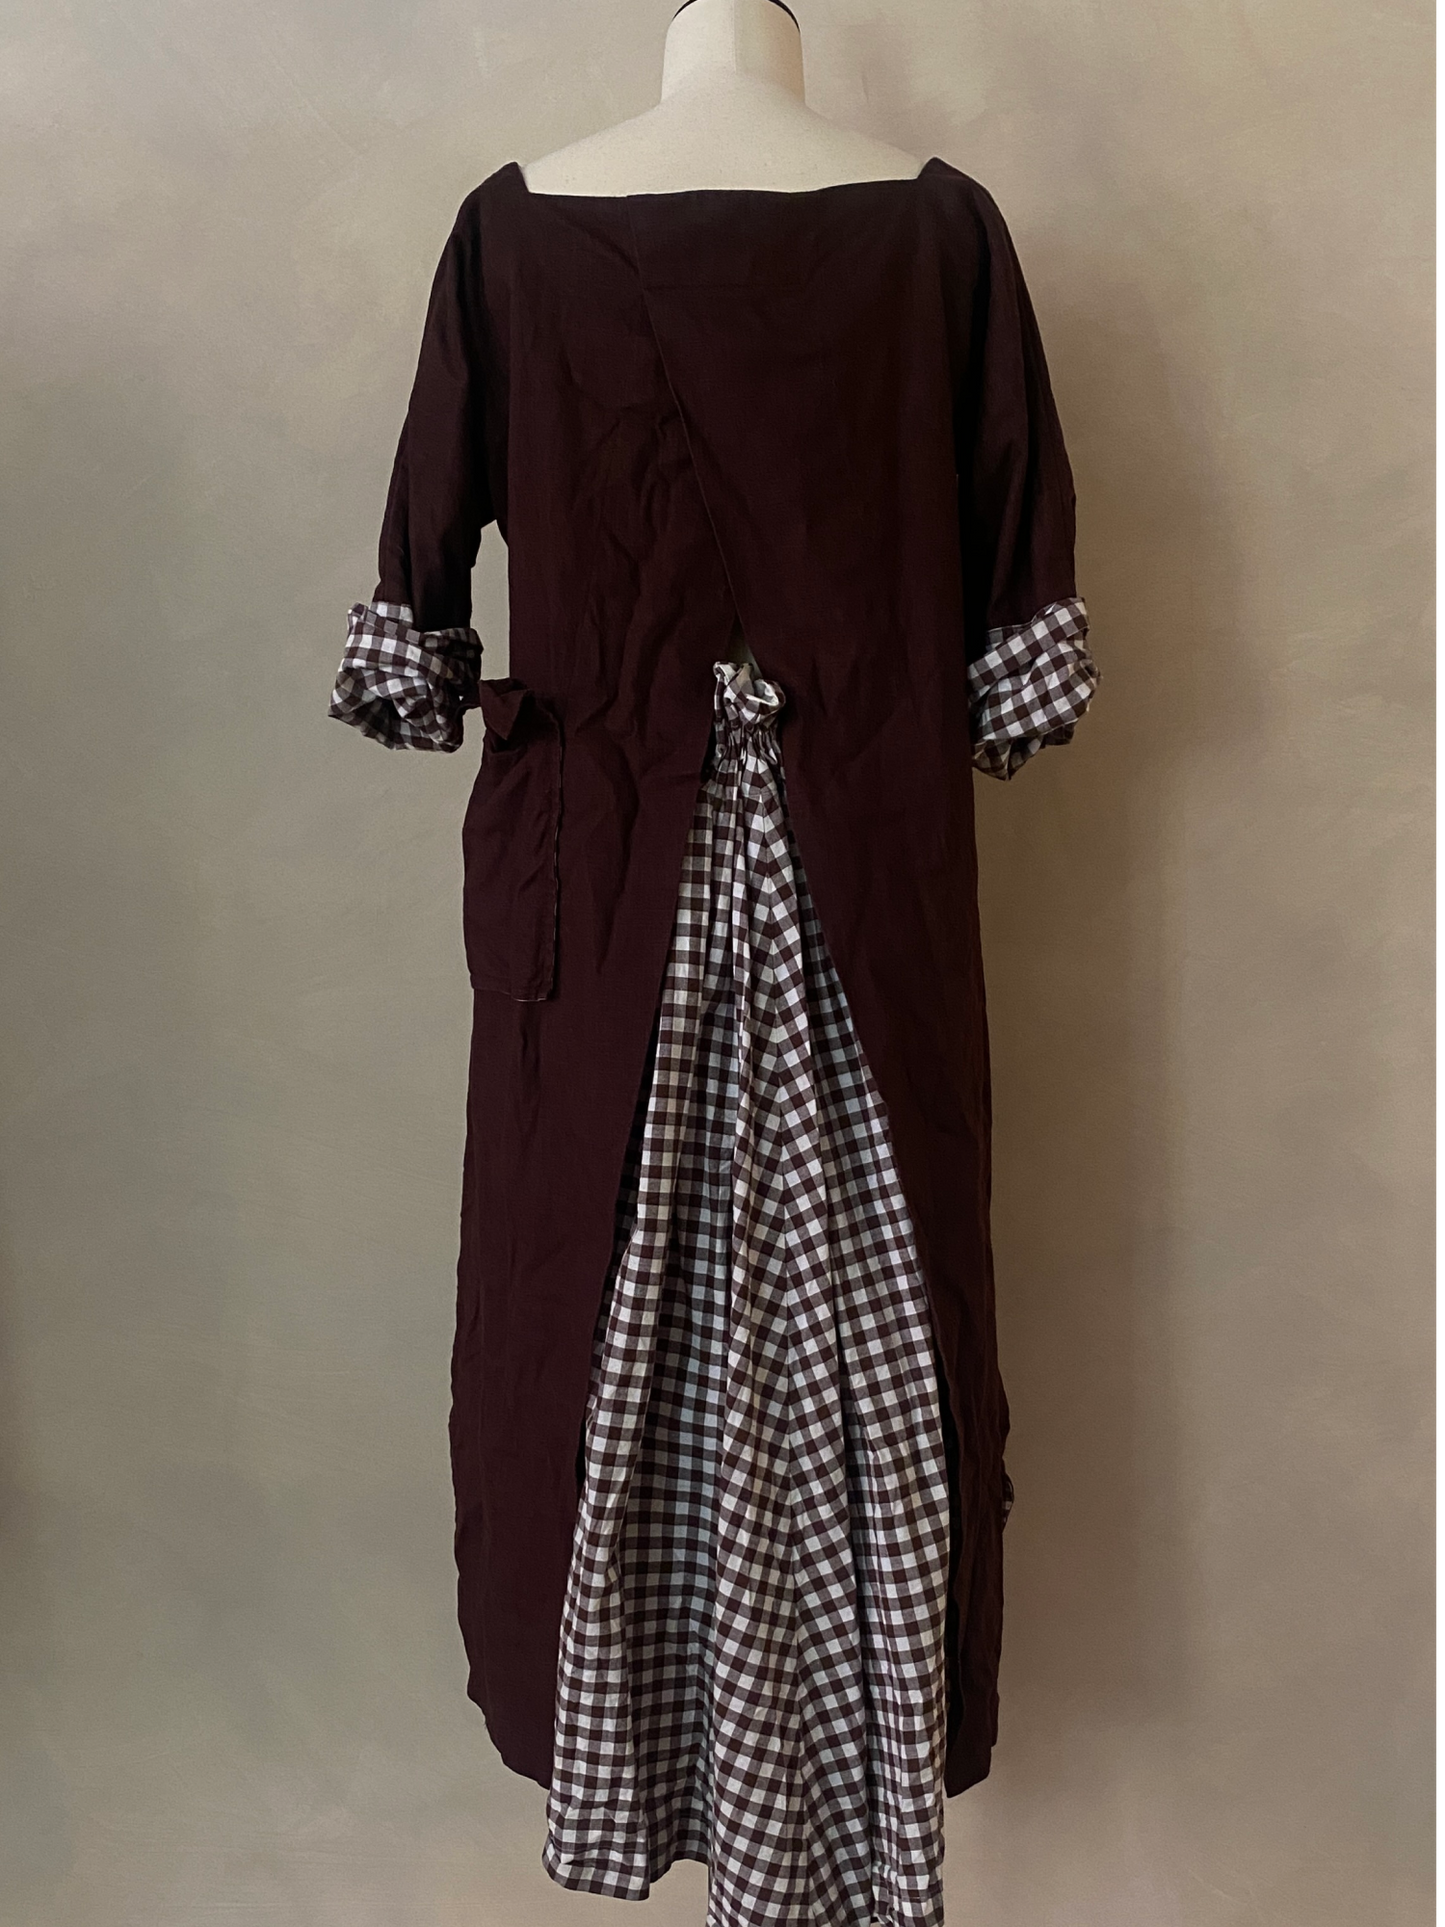 Two-piece linen brown dress